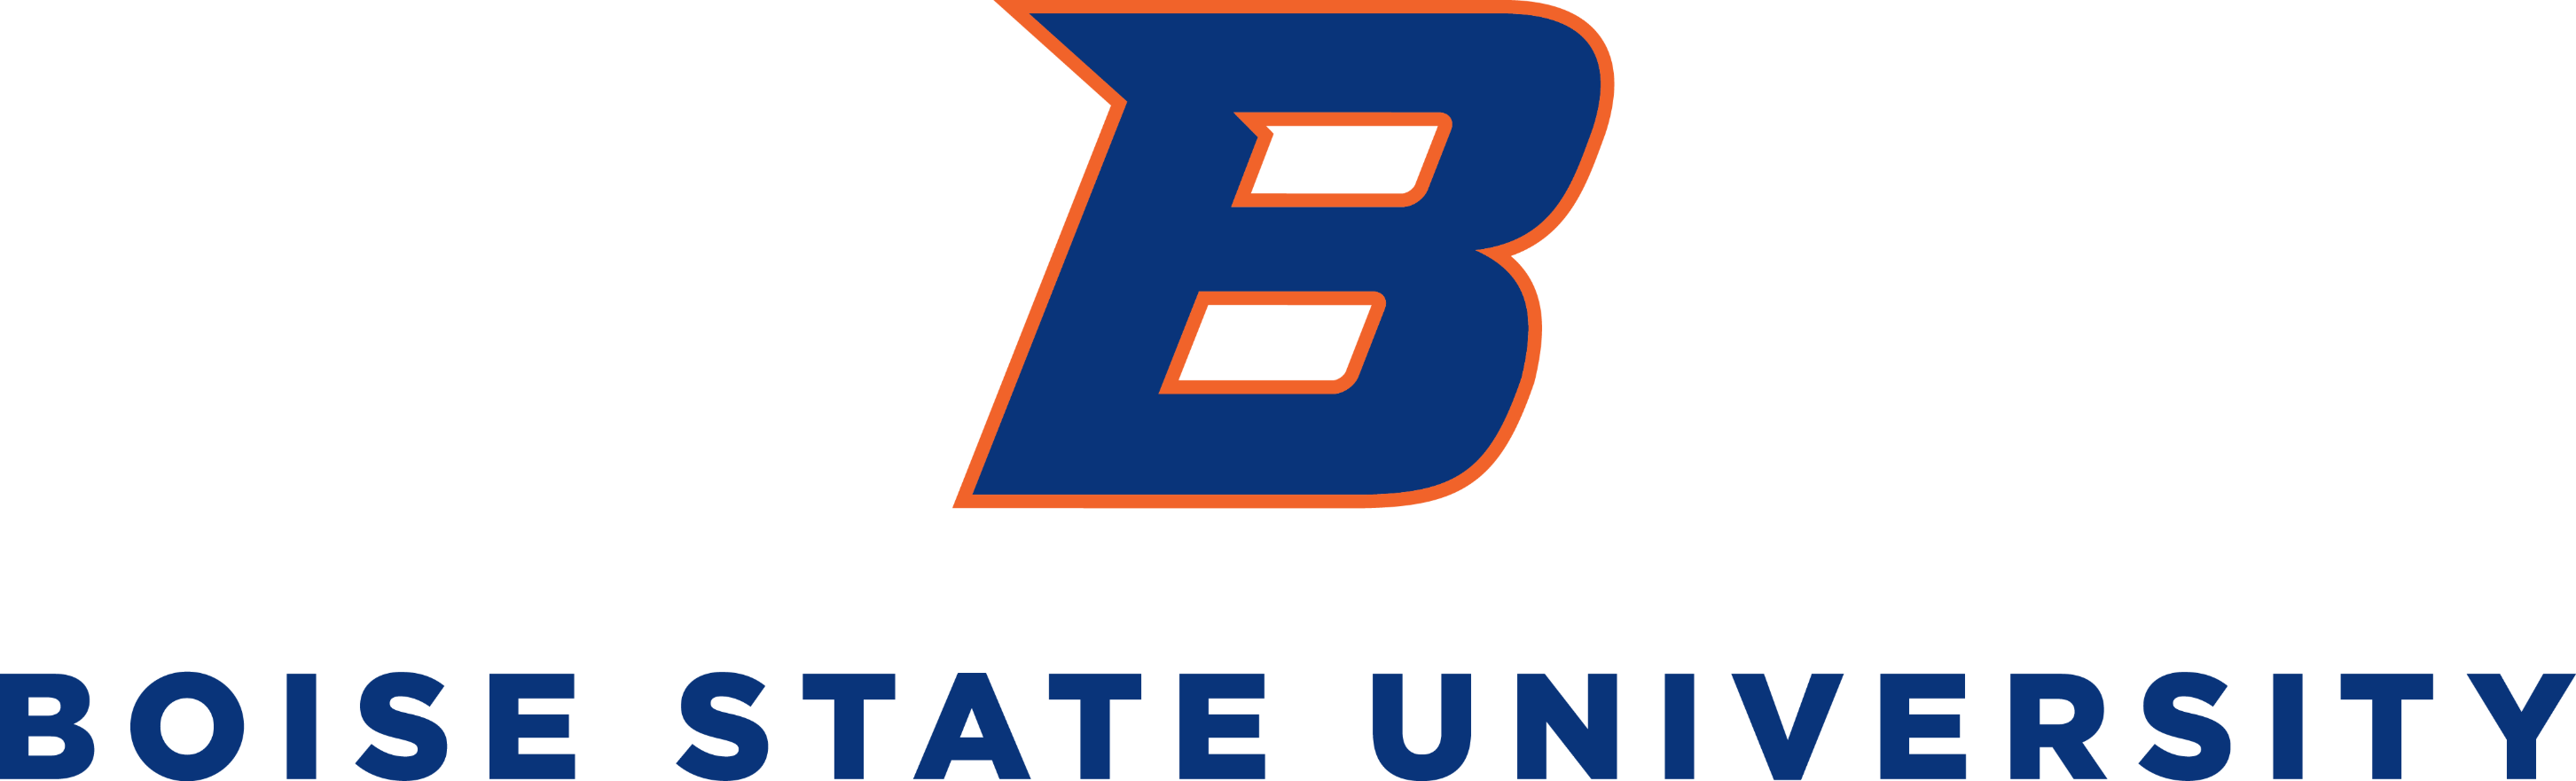 Boise state university logo